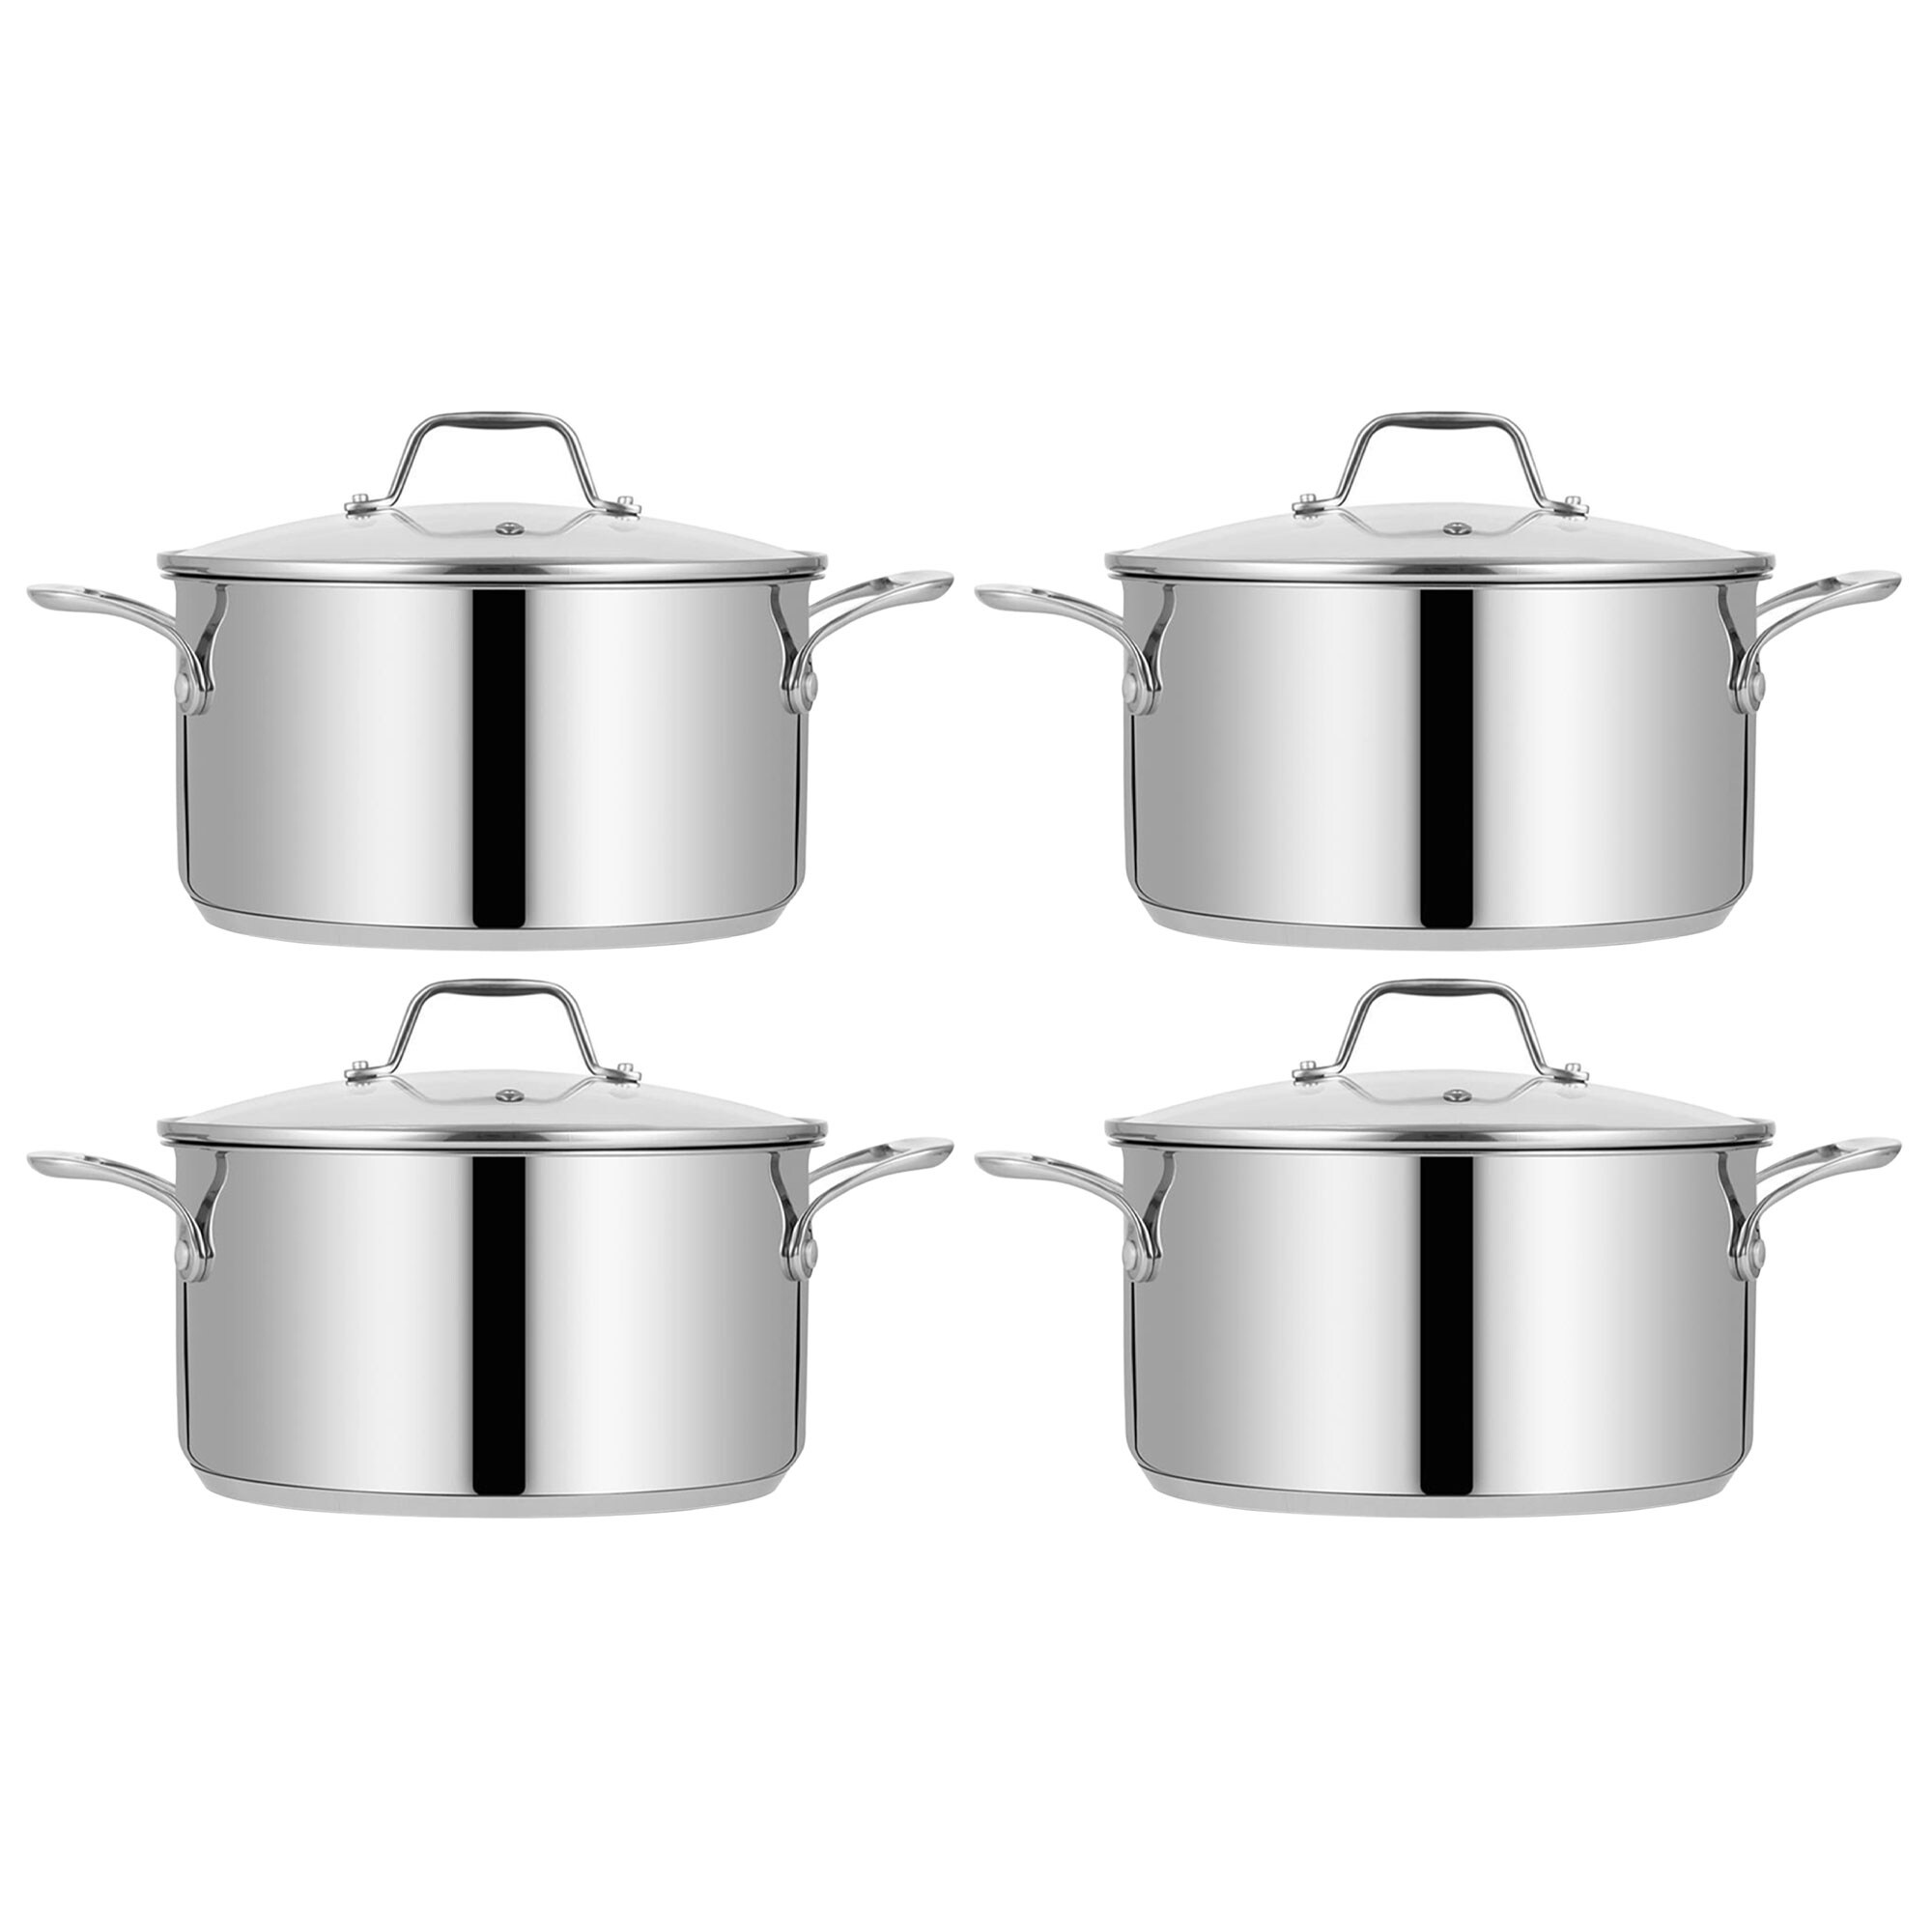 Nutrichef Stainless Steel Cookware Saucepan - 2 Quart, Heavy Duty